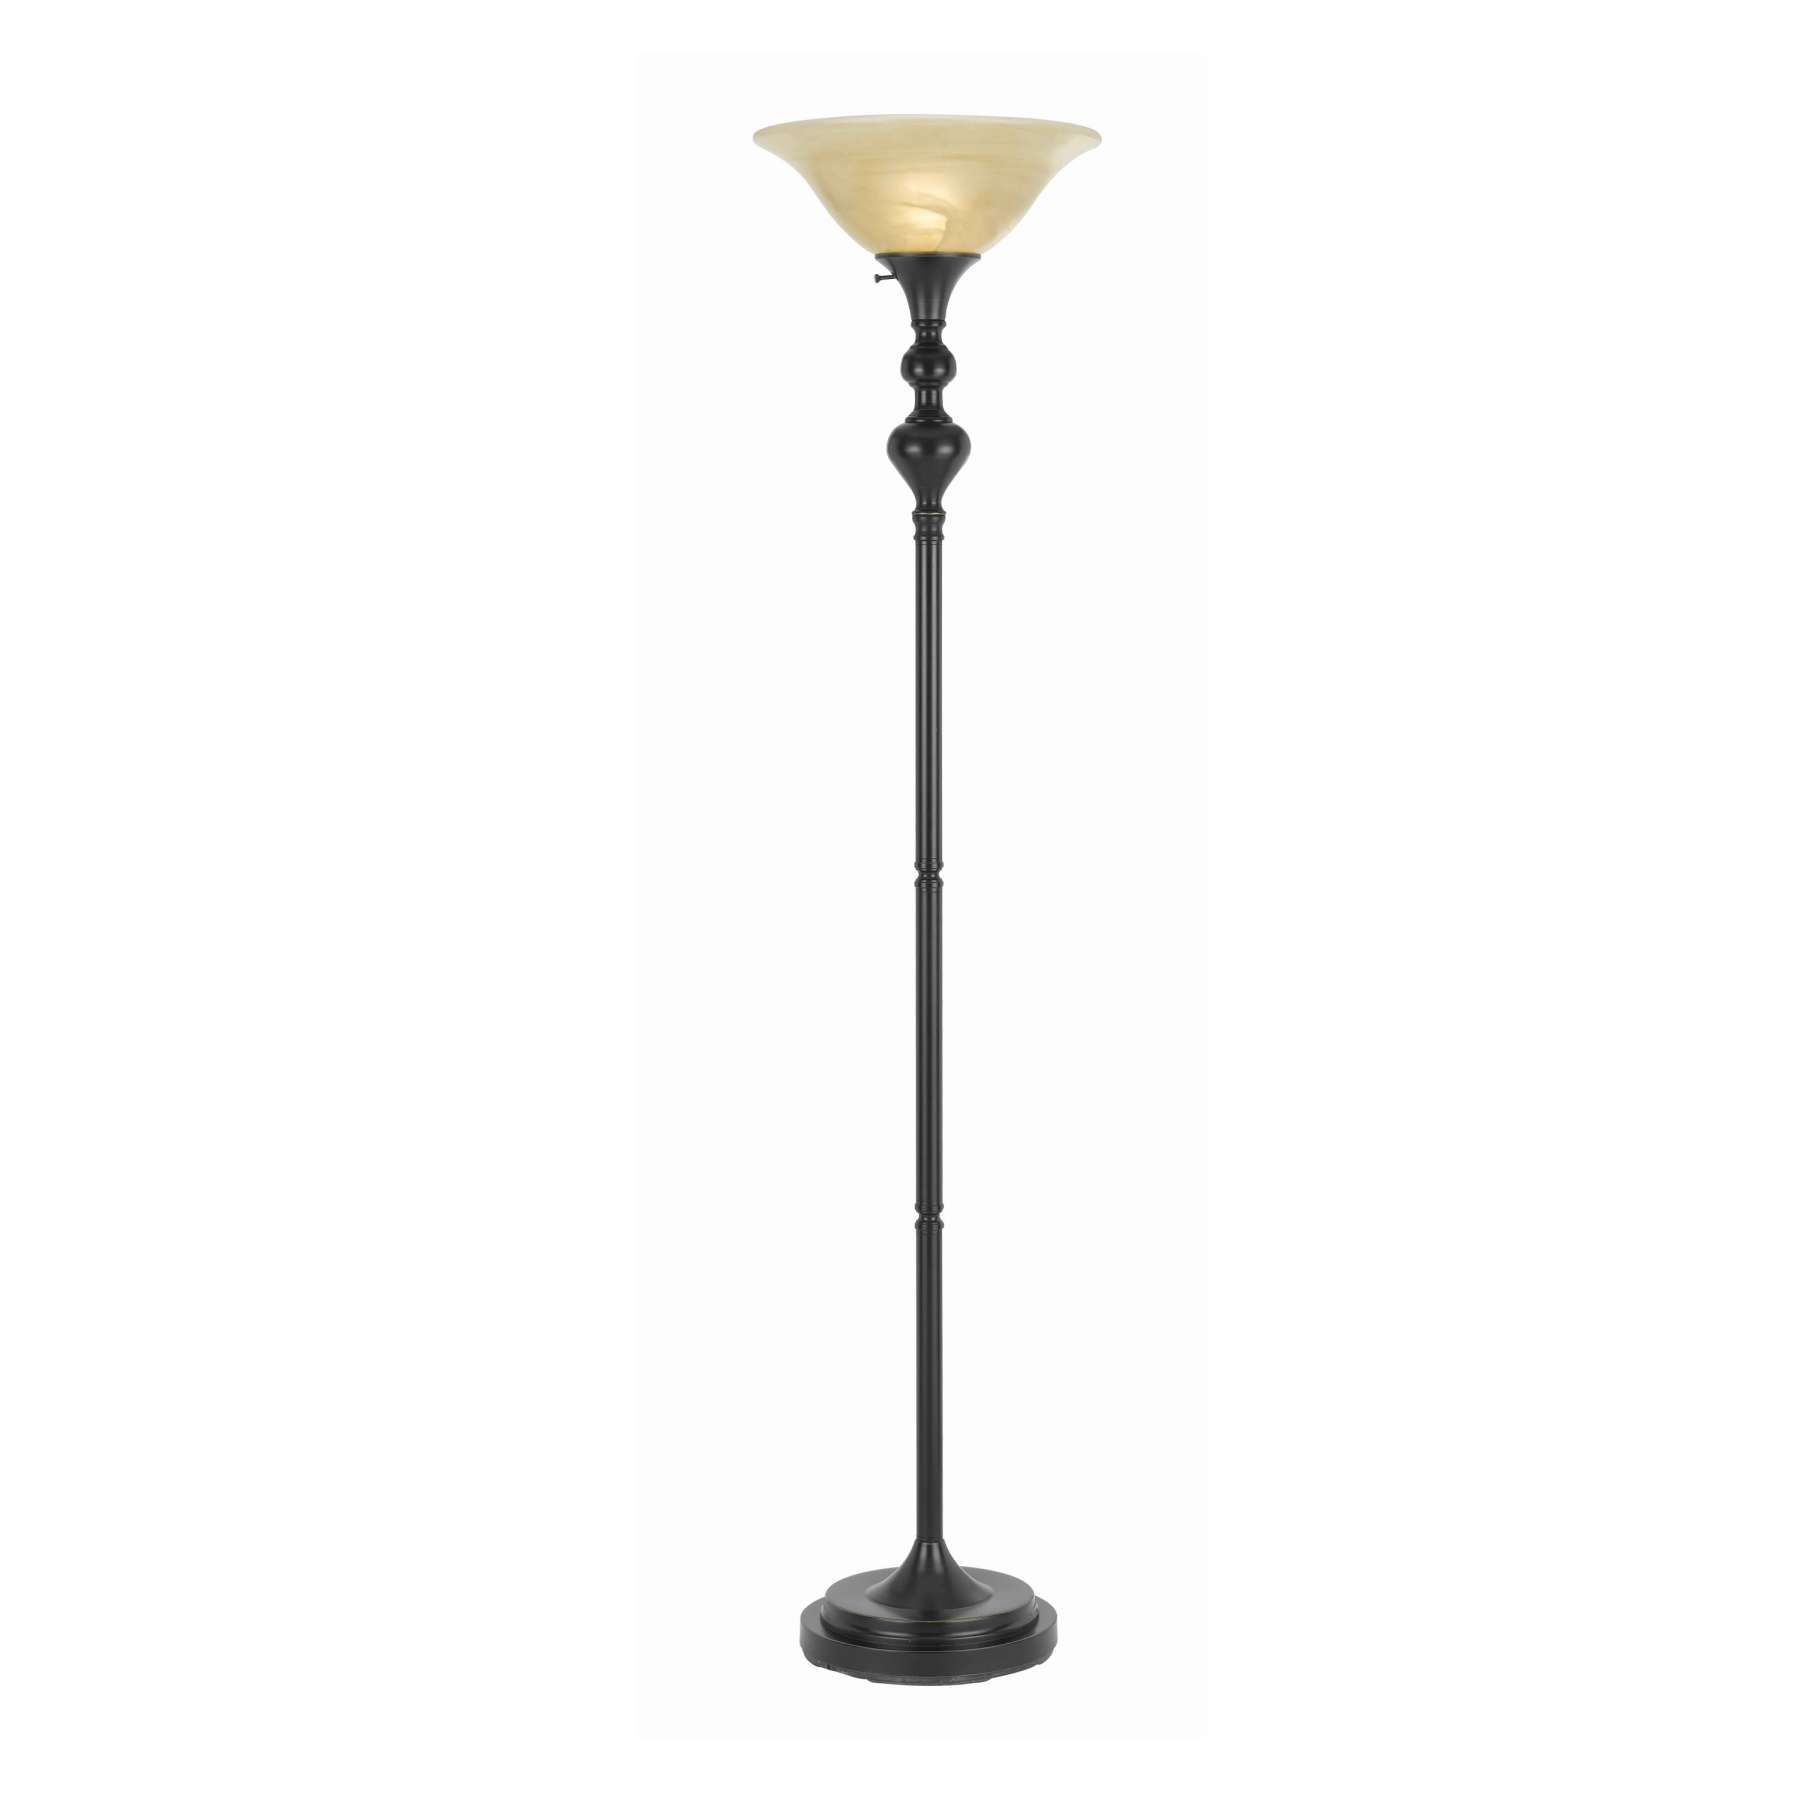 Benzara 3 Way Glass Shade Torchiere Floor Lamp With Metal Pedestal Base, Black By Benzara Floor Lamps BM224782